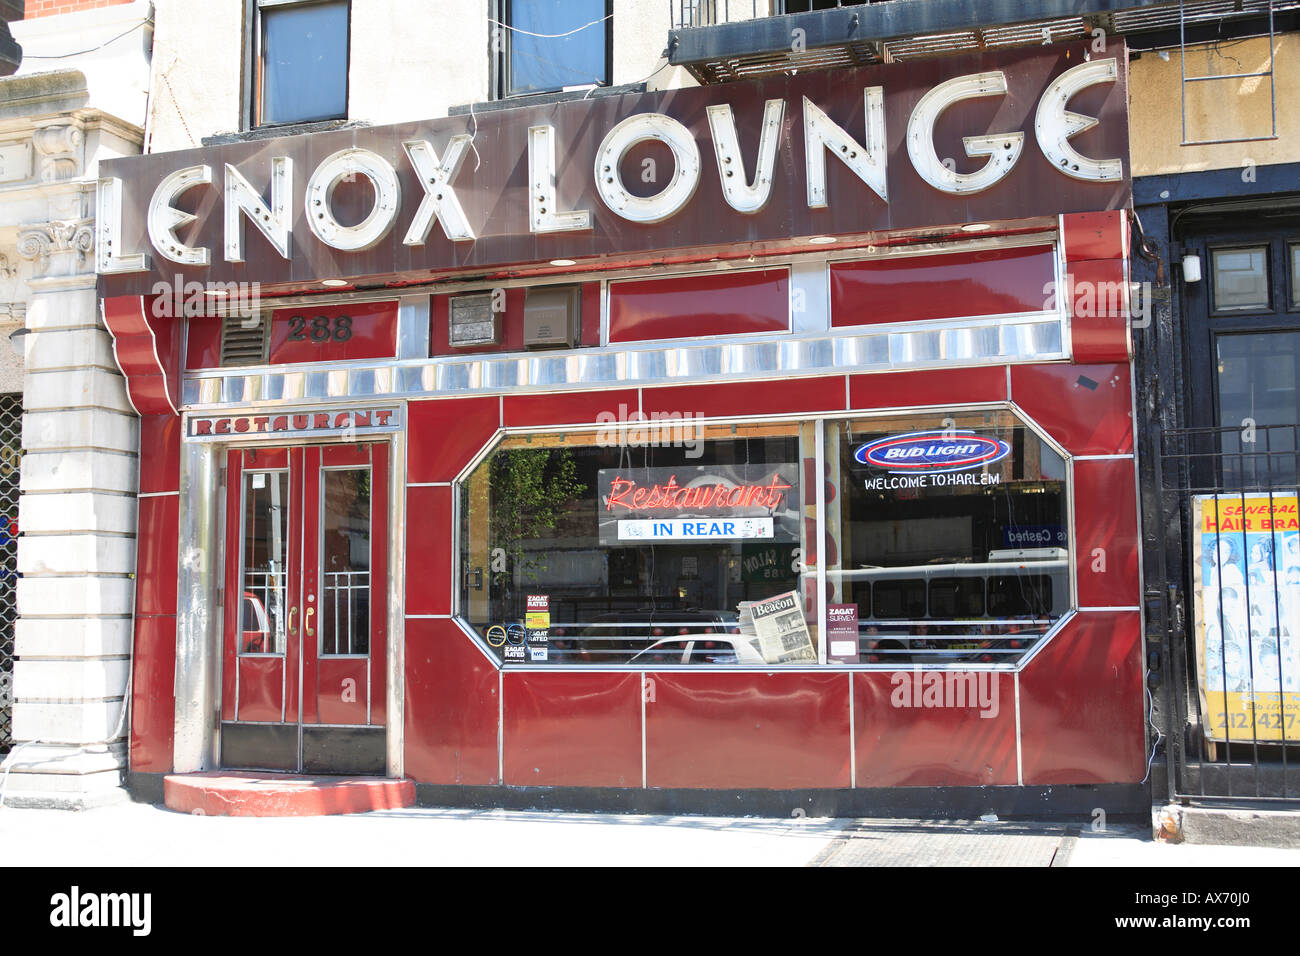 Lenox Lounge Malcolm X Boulevard Lenox Avenue Harlem Manhattan New York City USA Stockfoto